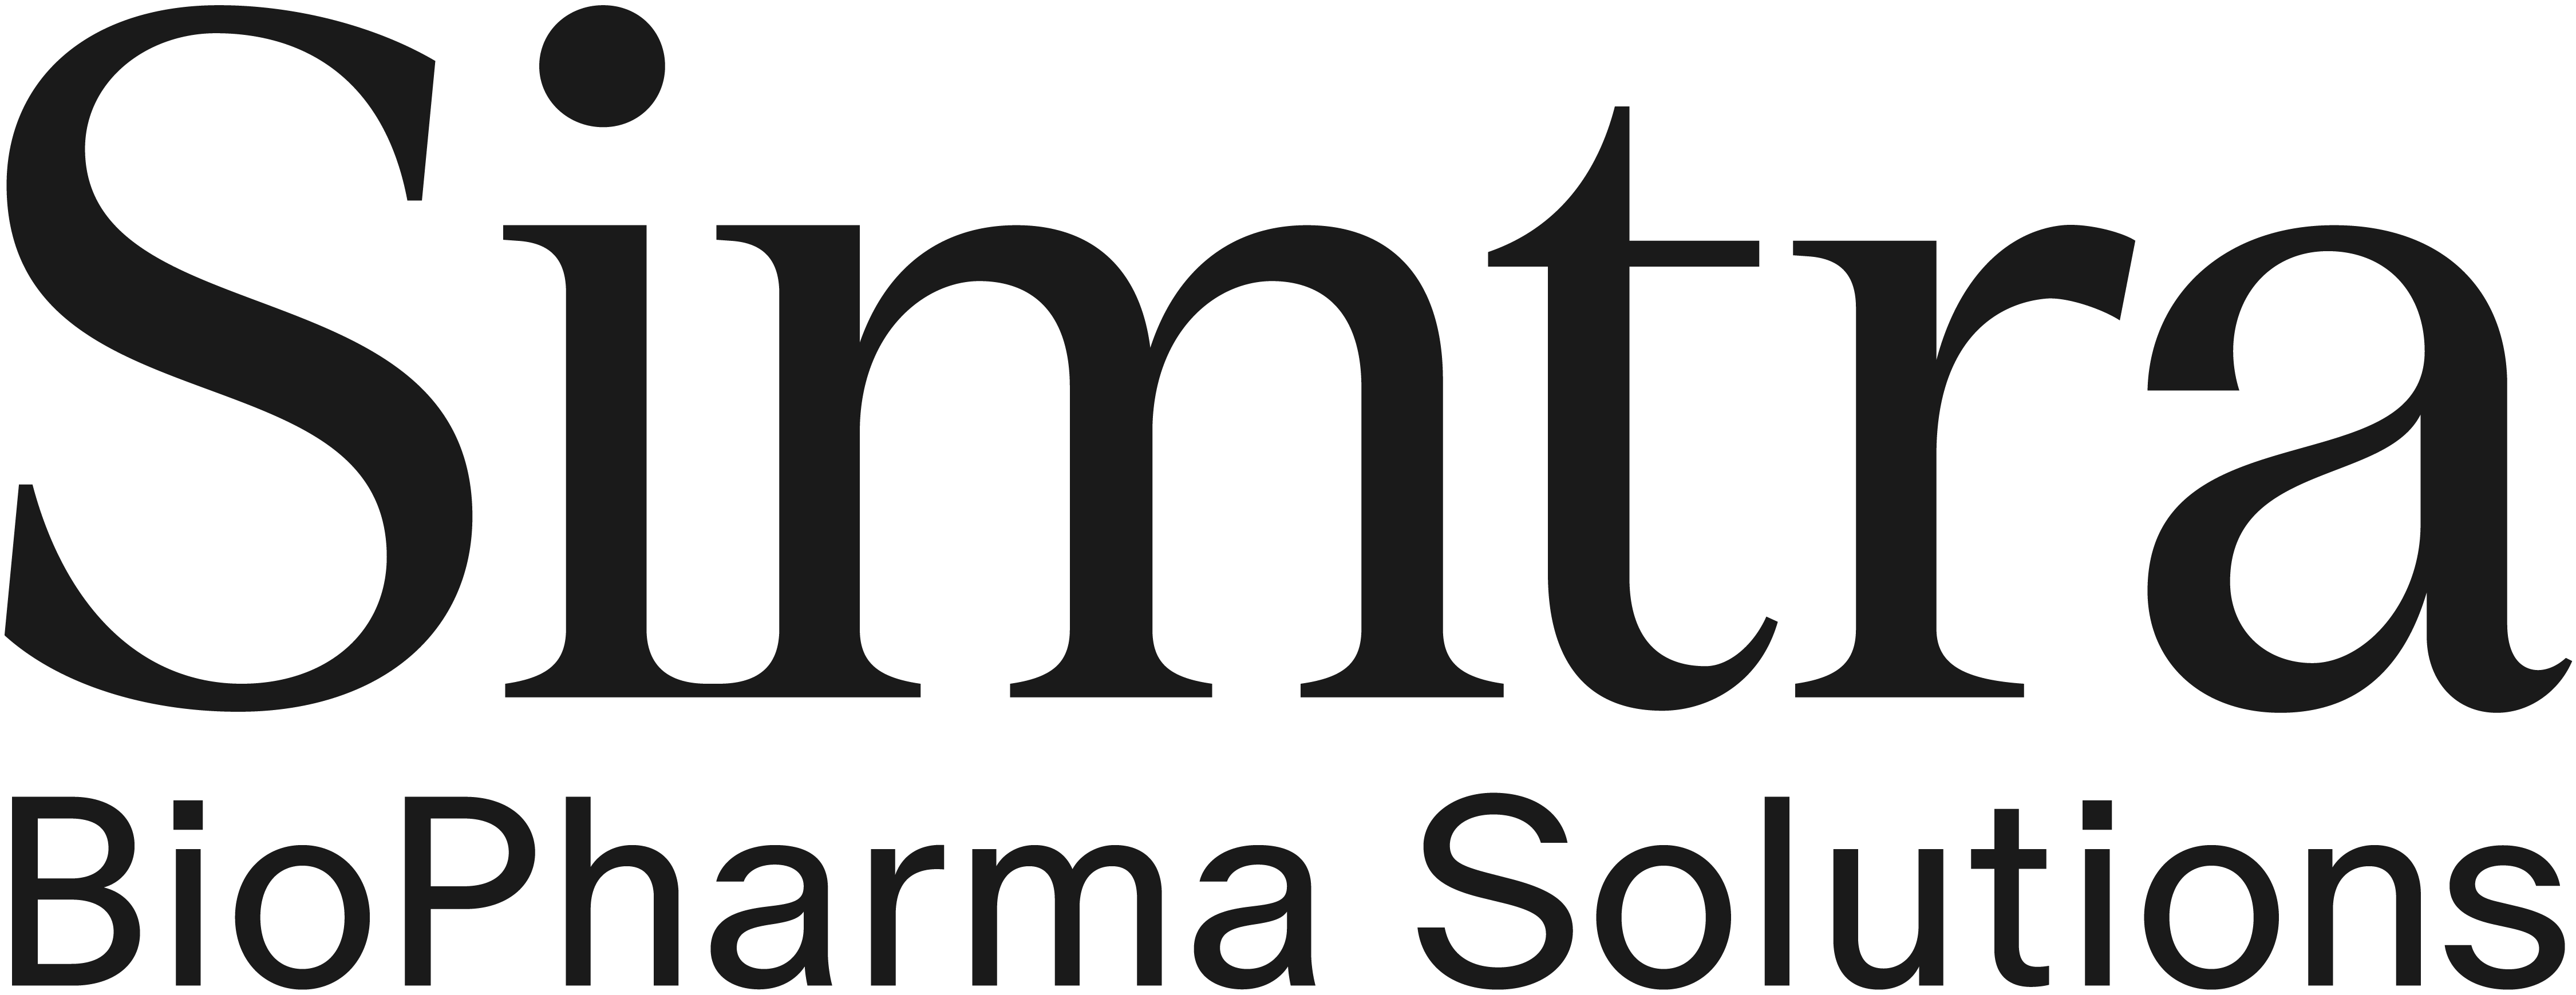 Simtra BioPharma Solutions